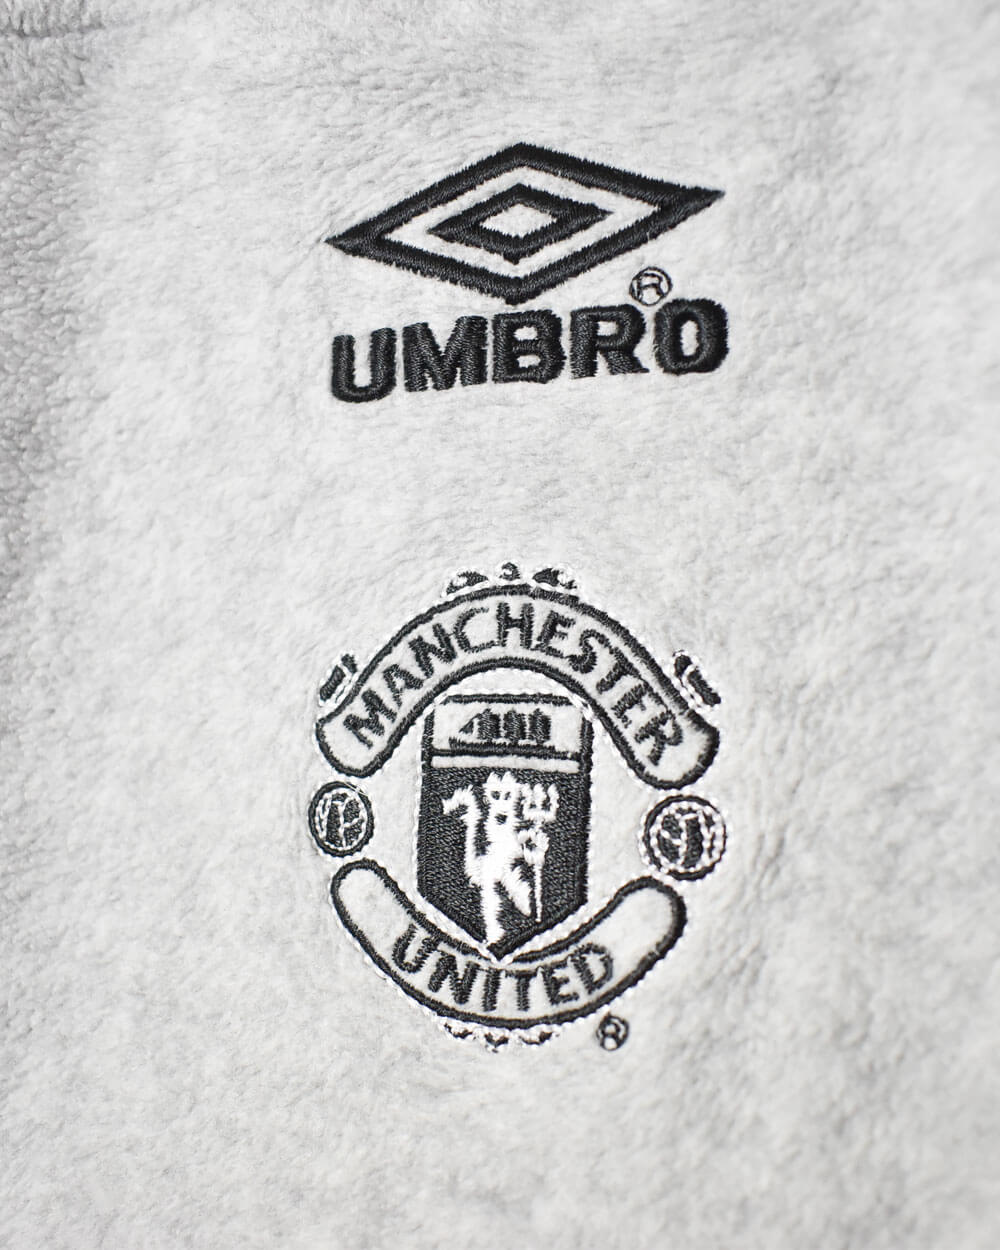 Stone Umbro Manchester United 1/4 Zip Fleece - Small